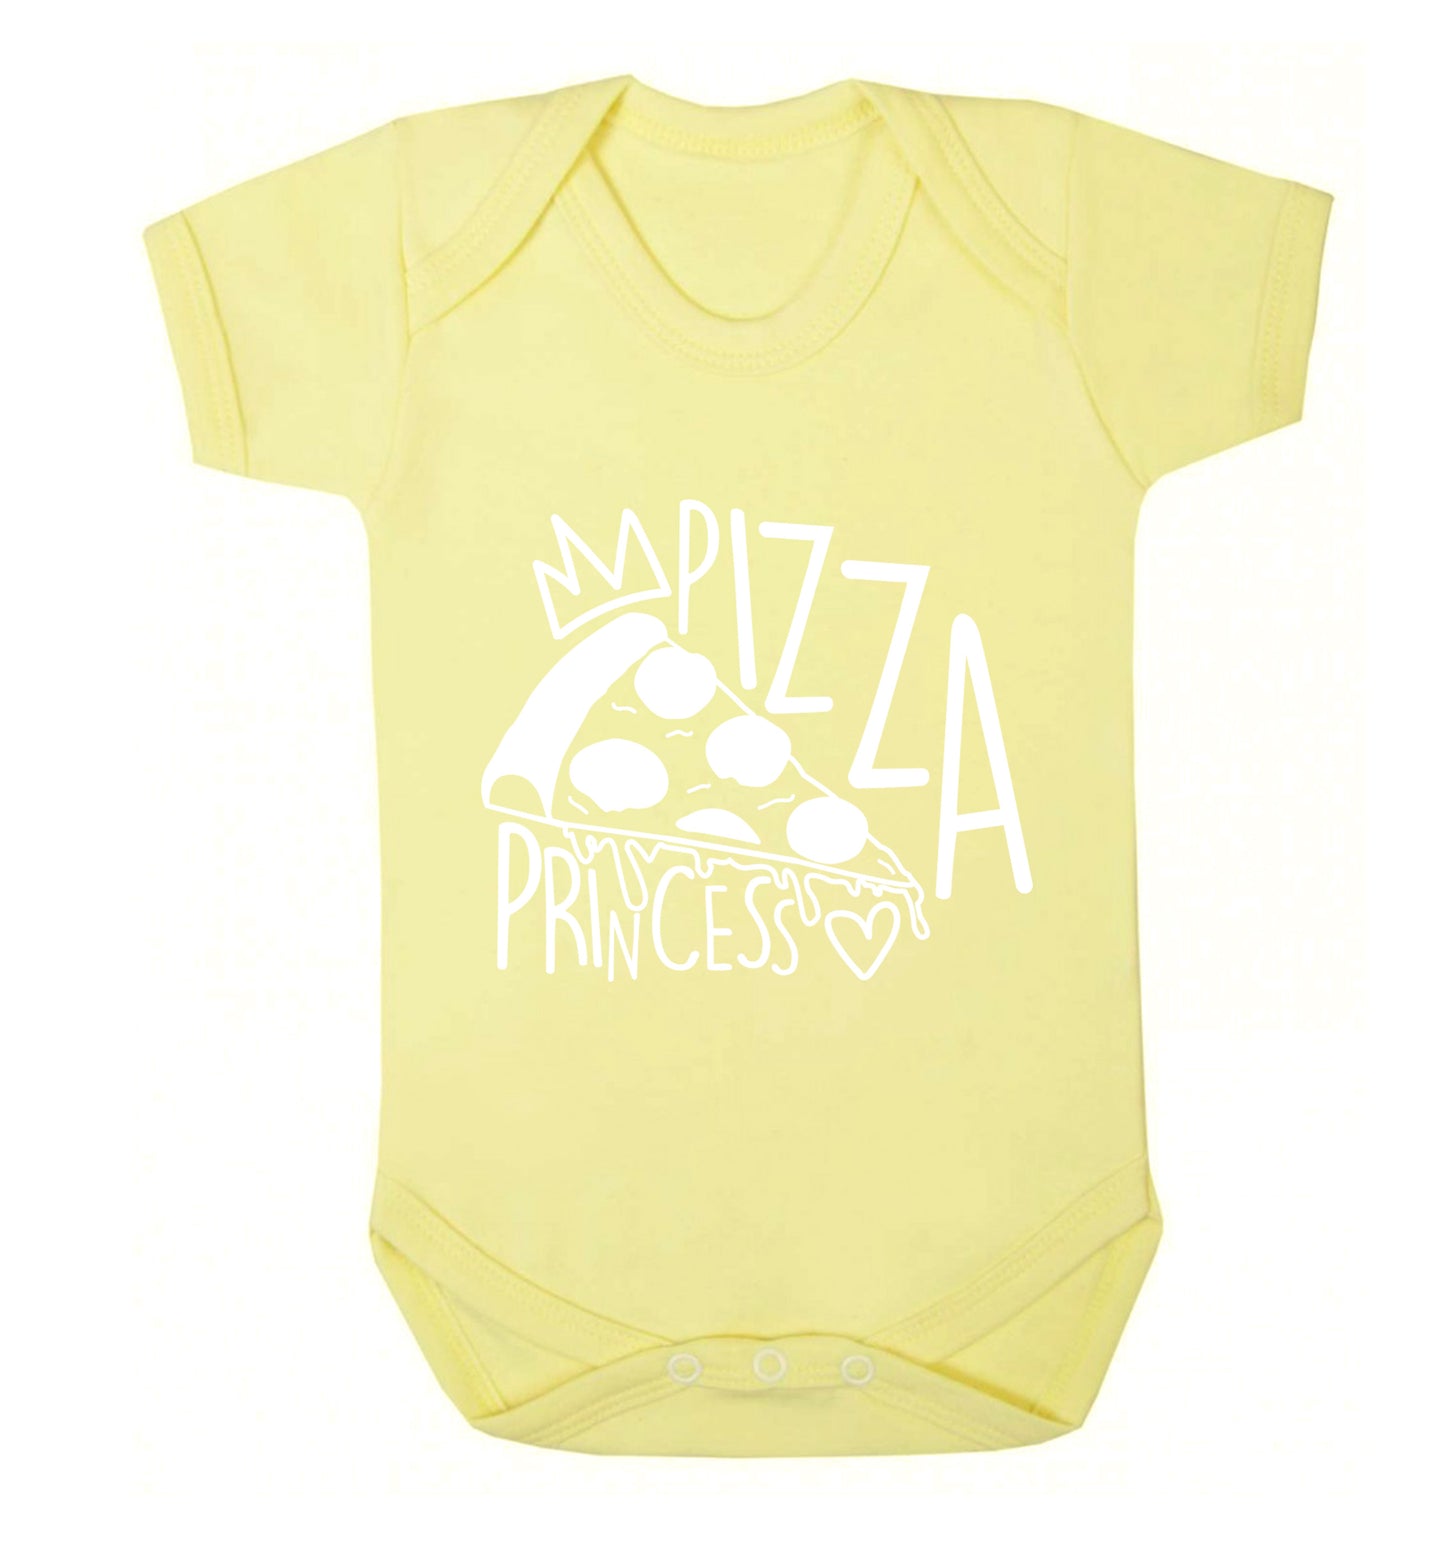 Pizza Princess Baby Vest pale yellow 18-24 months